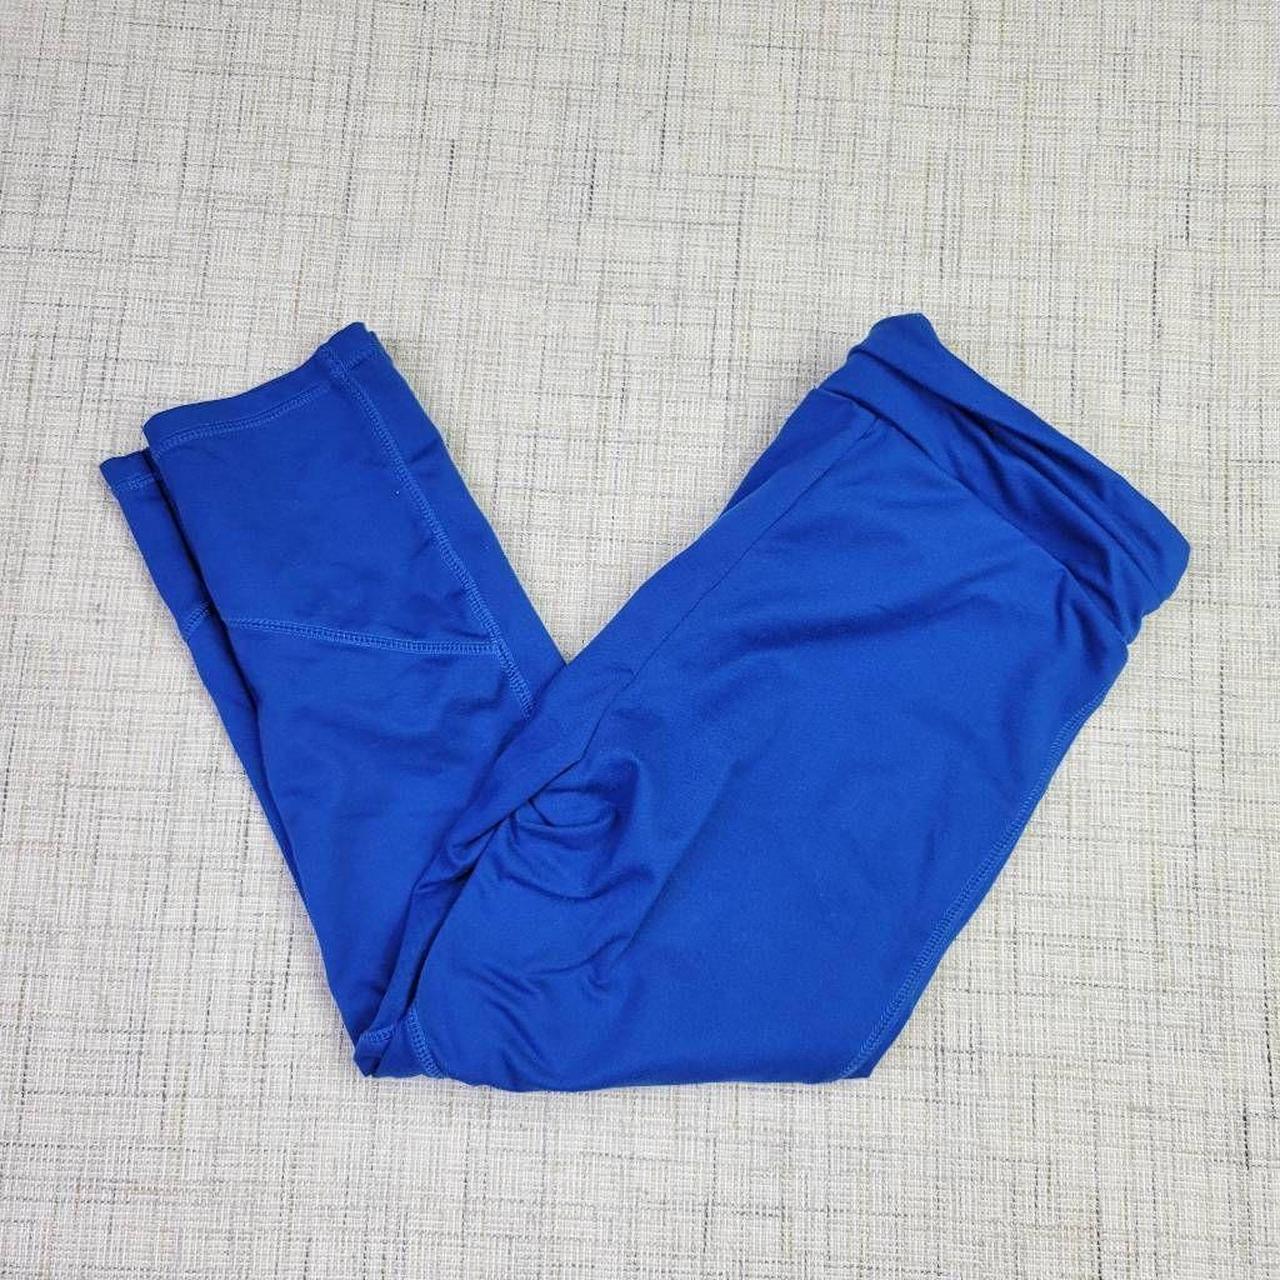 Lululemon leggings cropped capri royal blue zipper - Depop